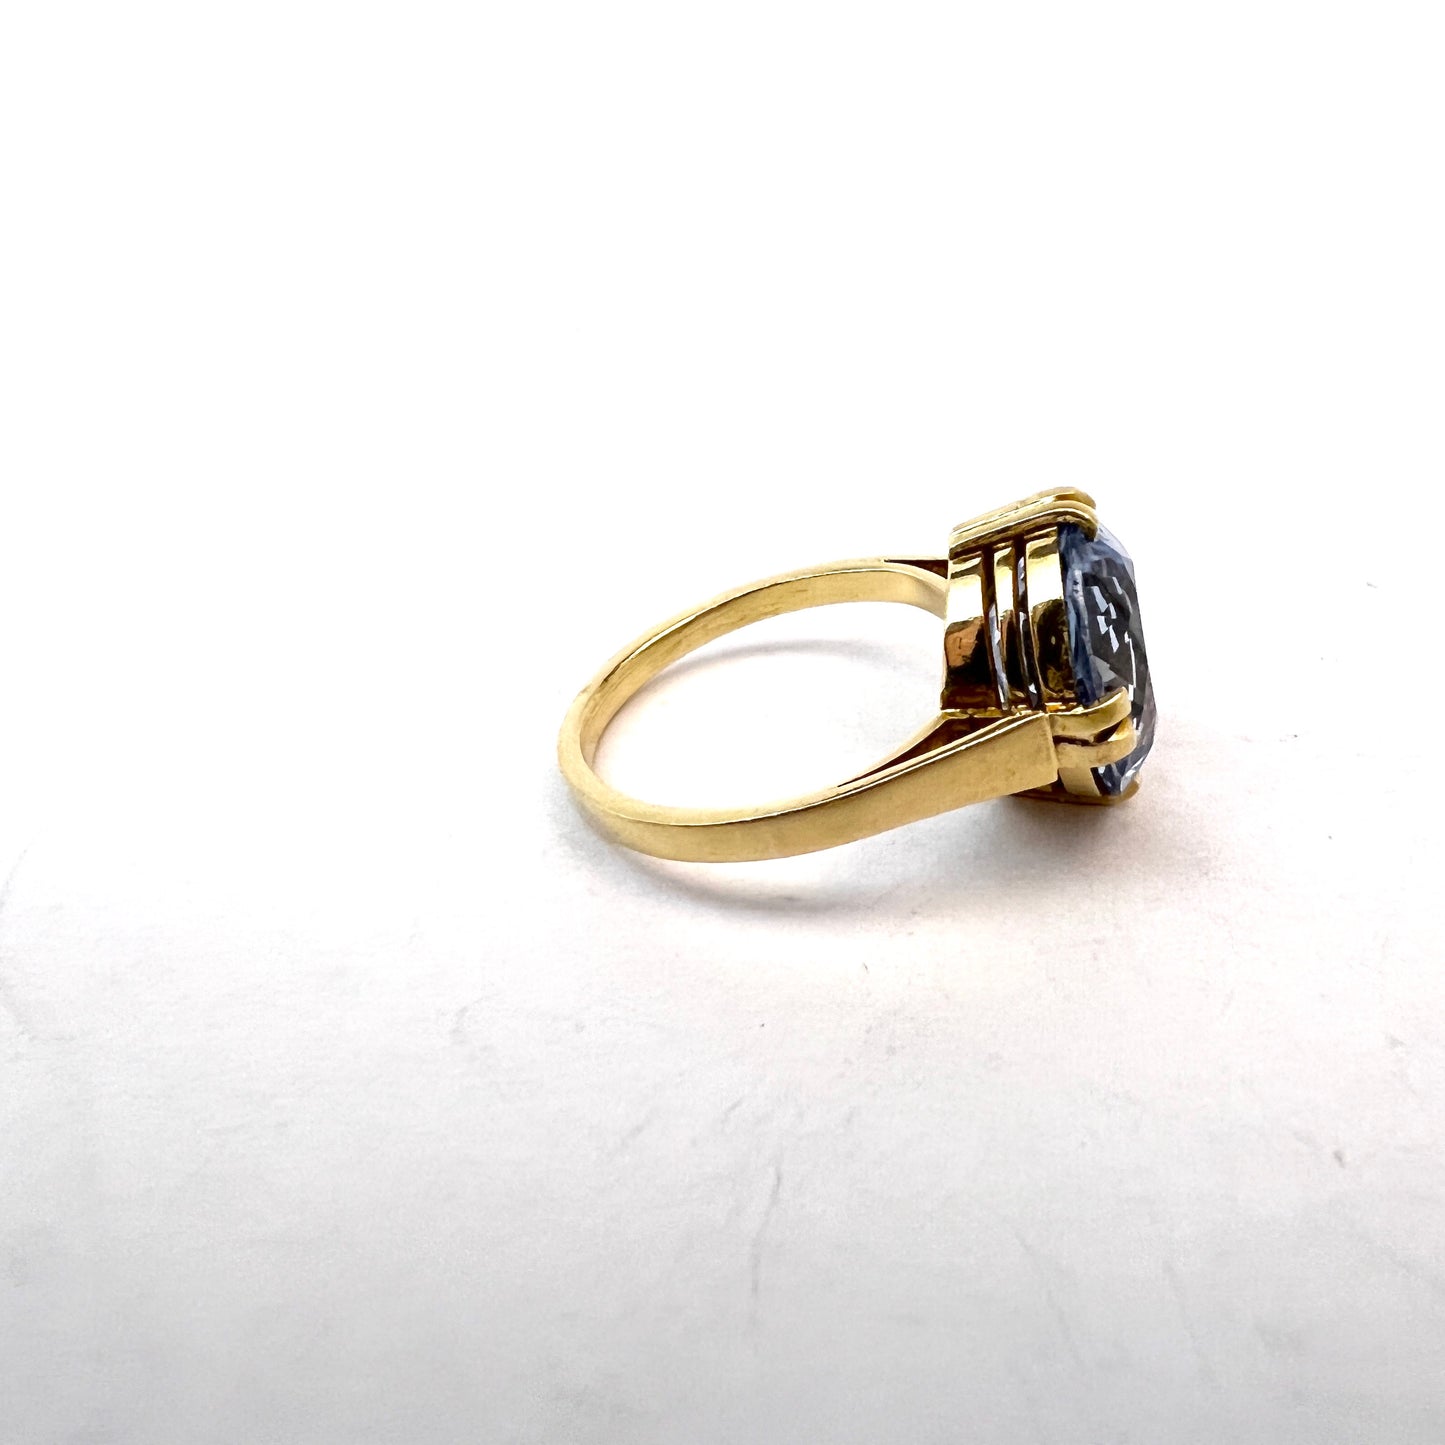 K Anderson, Sweden 1947. Vintage 14k Gold Ice Blue Synthetic Spinel Ring.